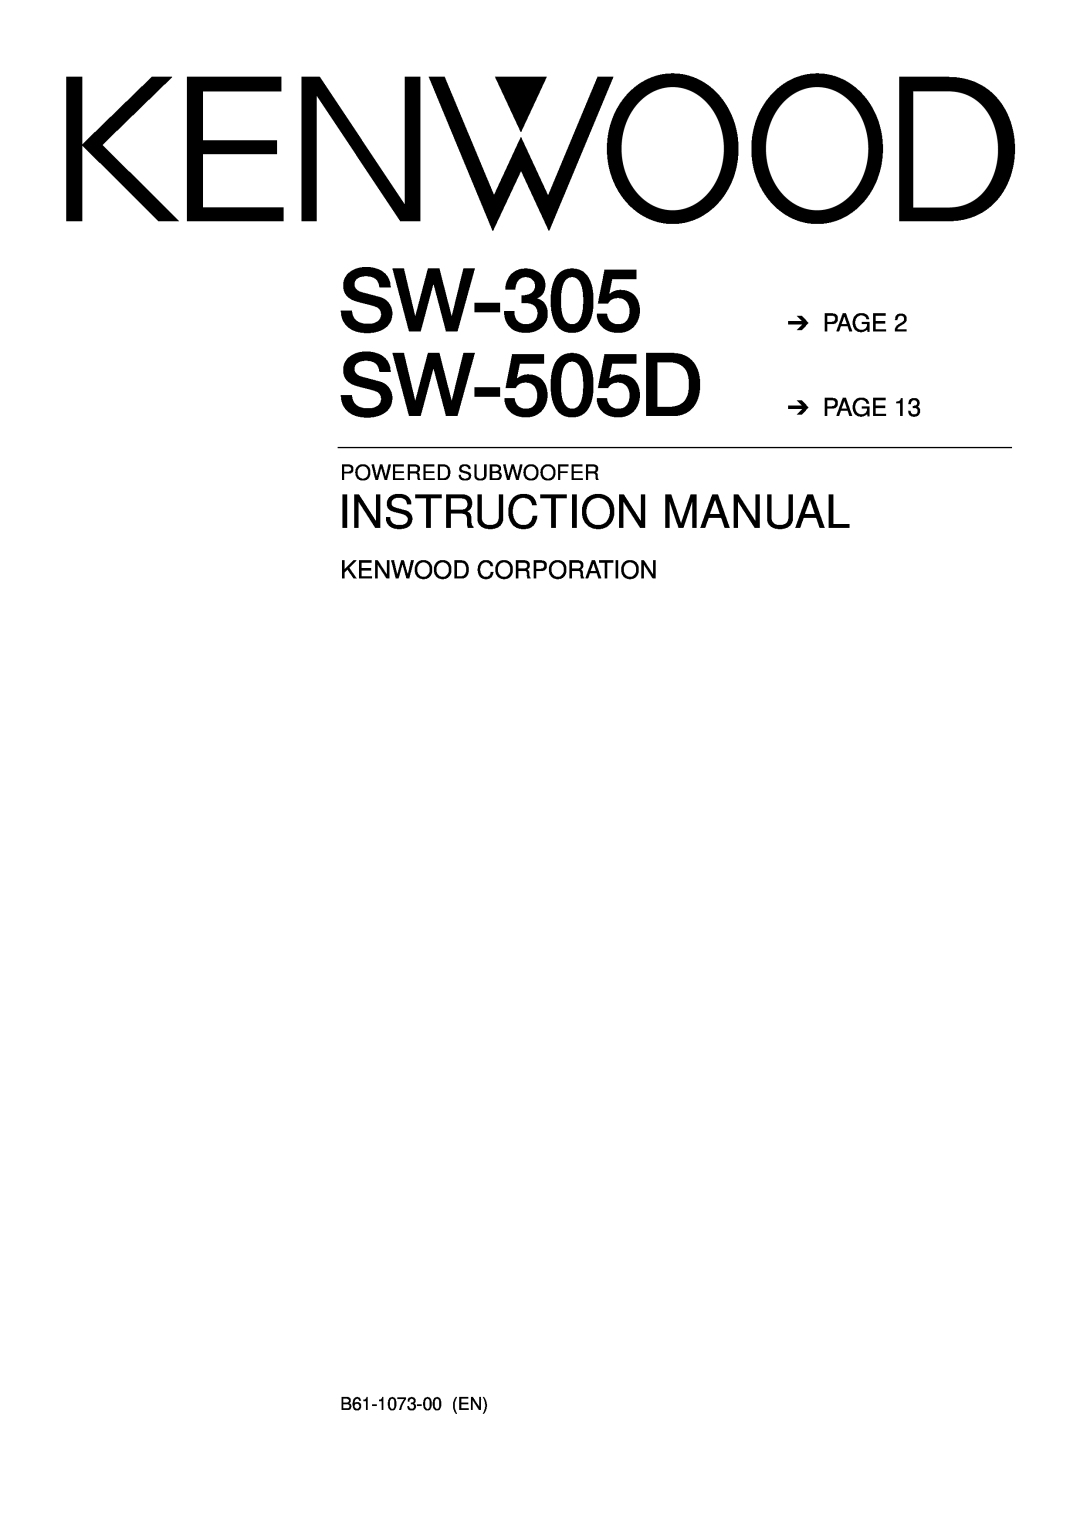 Kenwood instruction manual Page Page, Kenwood Corporation, Powered Subwoofer, B61-1073-00 EN, SW-305 SW-505D 